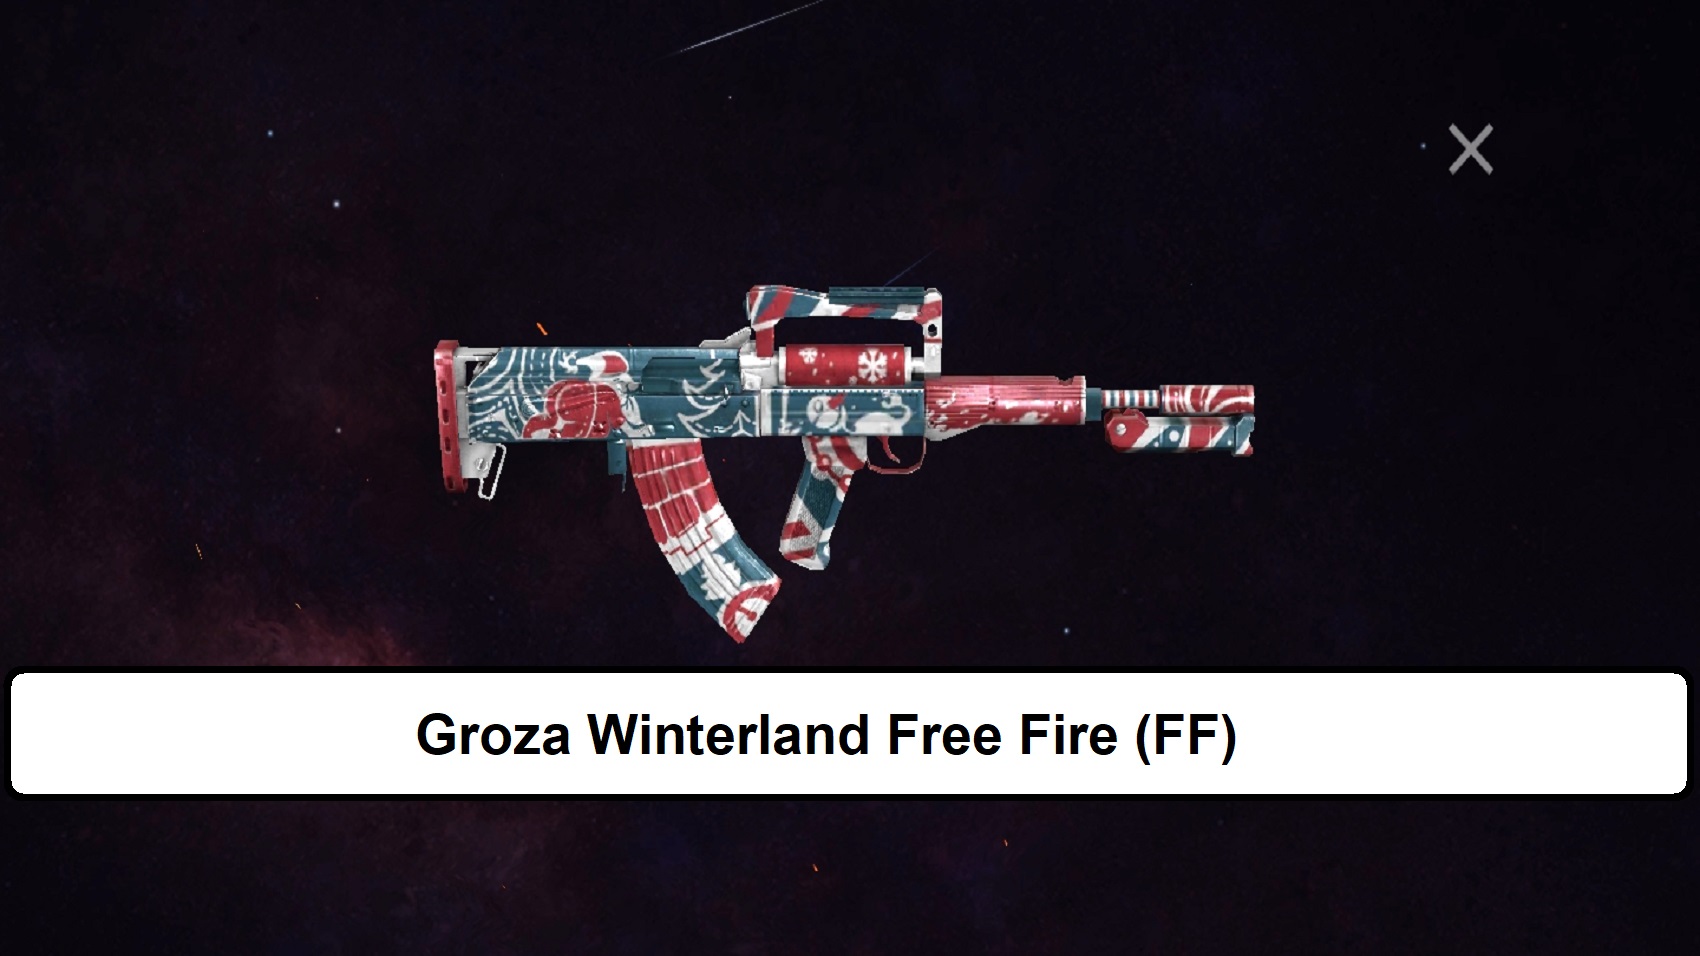 Groza Winterland Free Fire (FF), Terbaru!